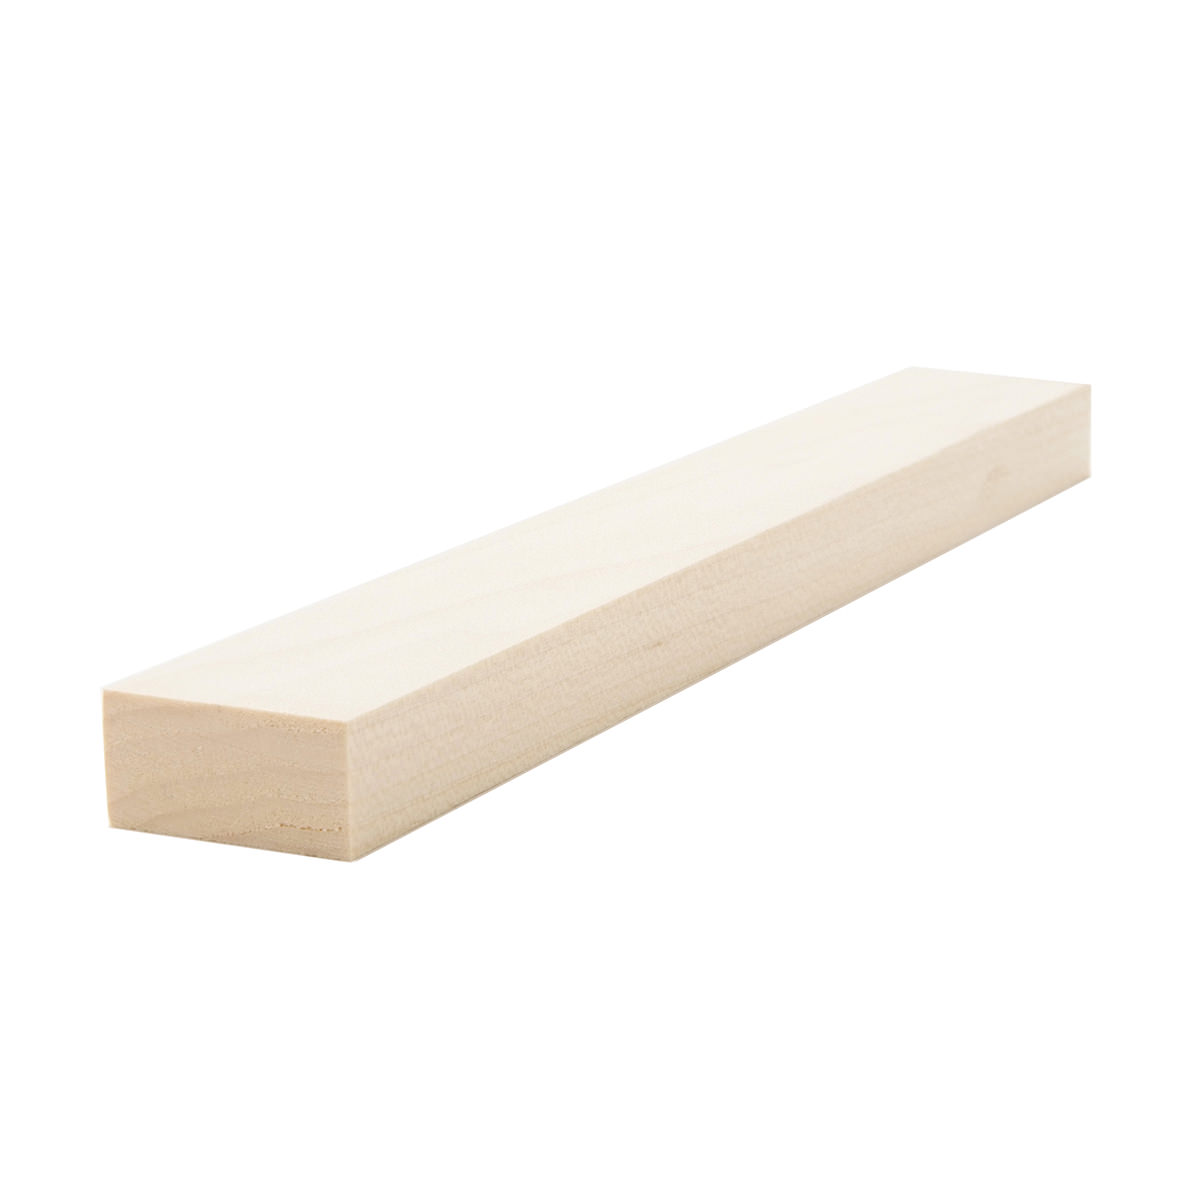 1x2 (3/4" x 11/2") Poplar S4S Lumber, Boards, & Flat